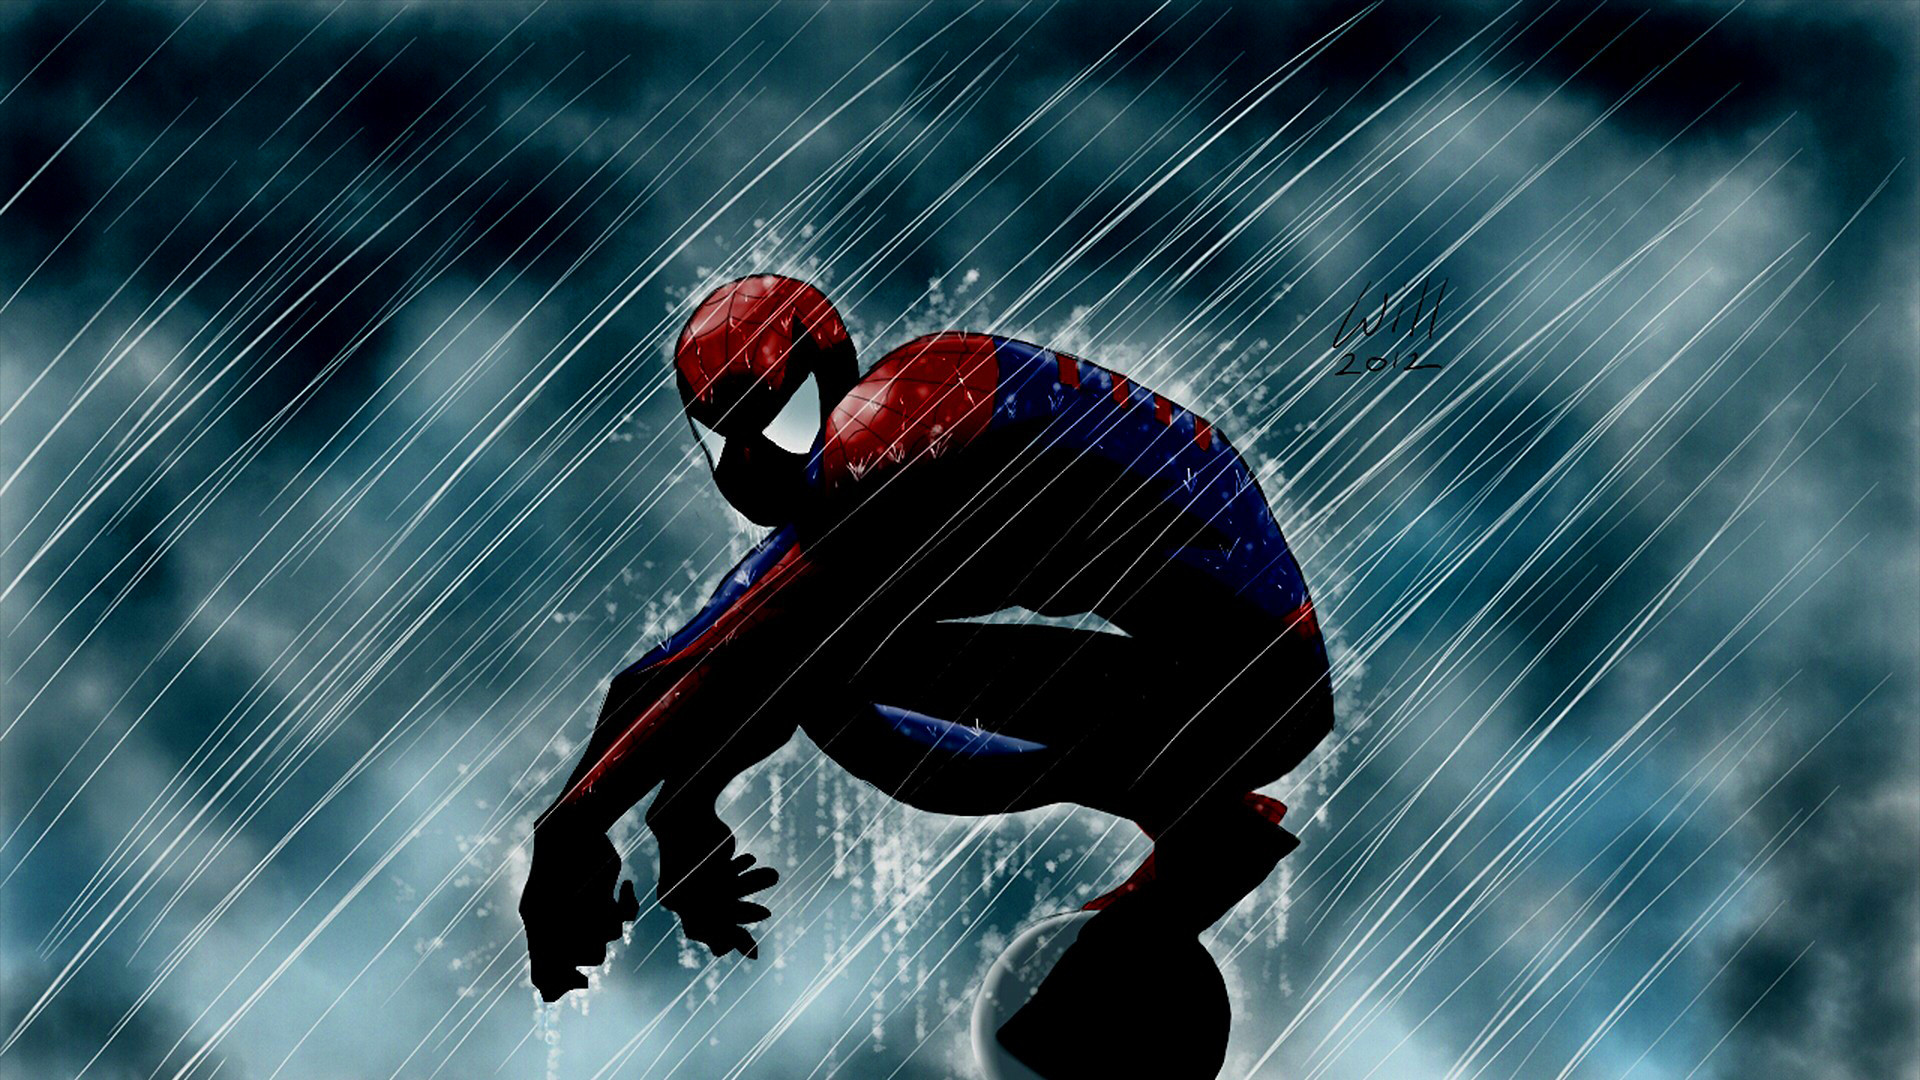 Spider Man in Rain Renewed by Sephirozaine